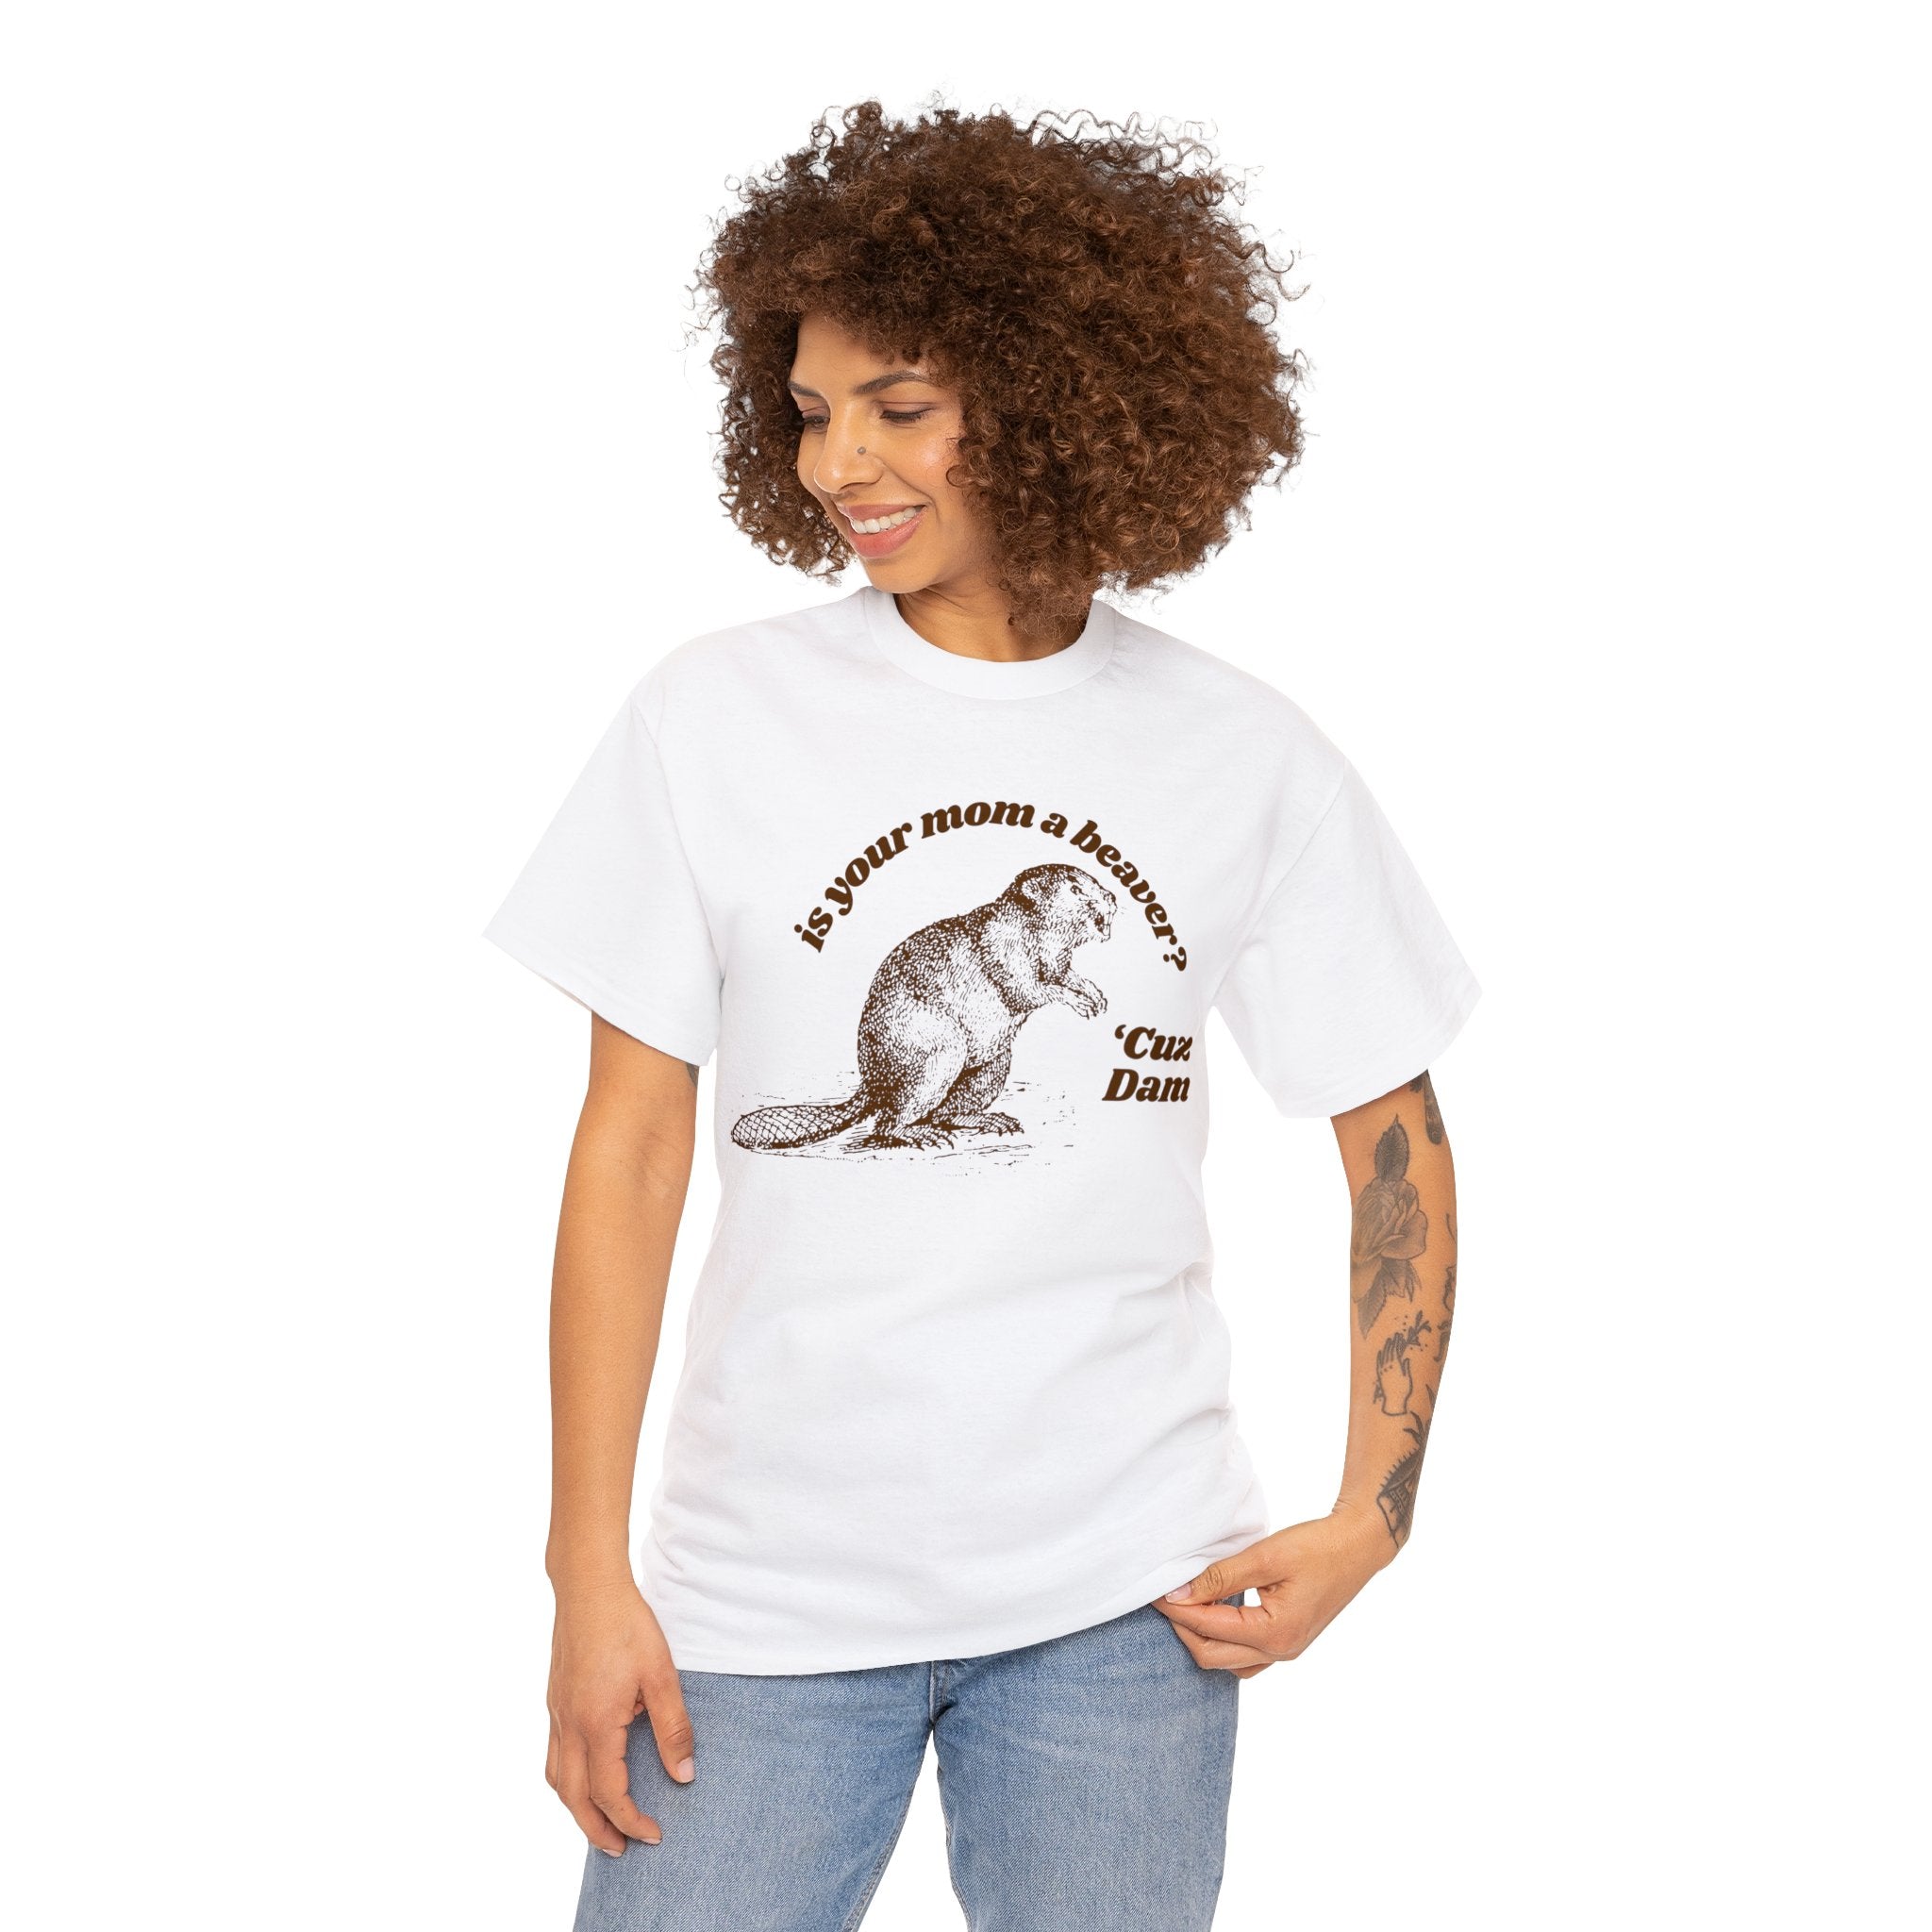 Is your mom a beaver? cuz dam shirt | funny t-shirt | cute animal shirt | funny saying shirt | vintage shirt | sarcastic t-shirt